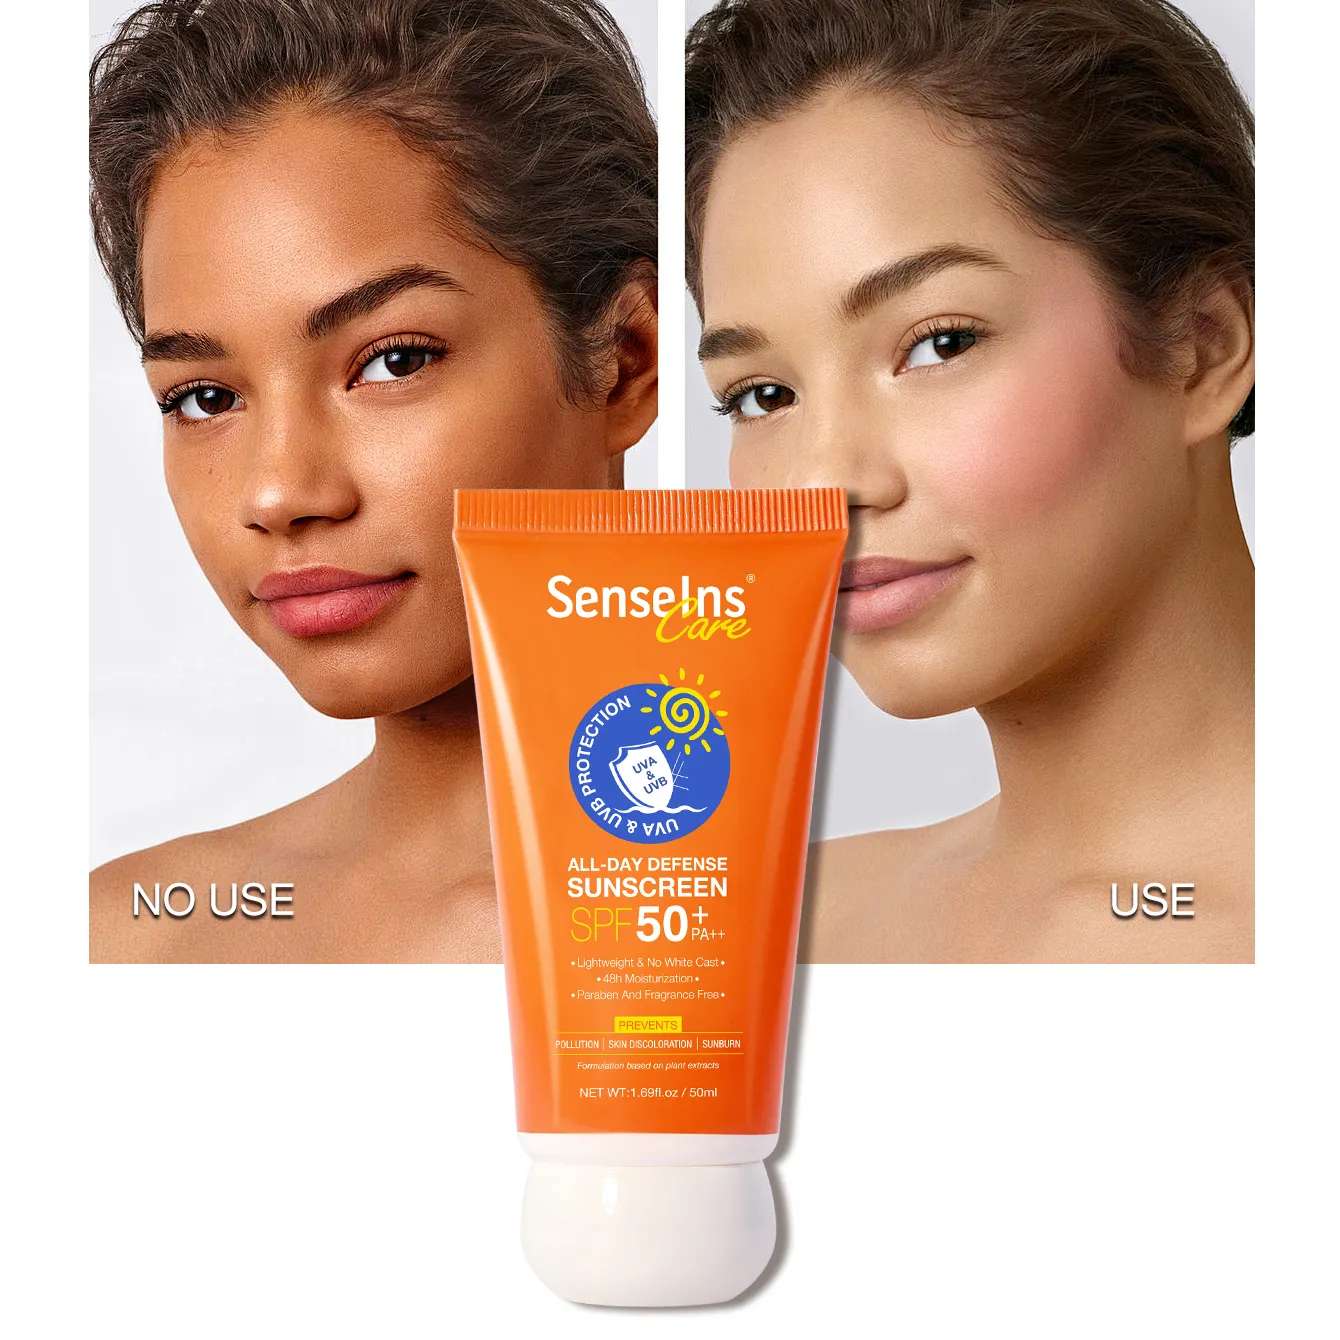 Wholesale All-Day Defense Sunscreen organic Facial Whitening UV Sunblock Cream Sunscreen SPF 50+ PA++++